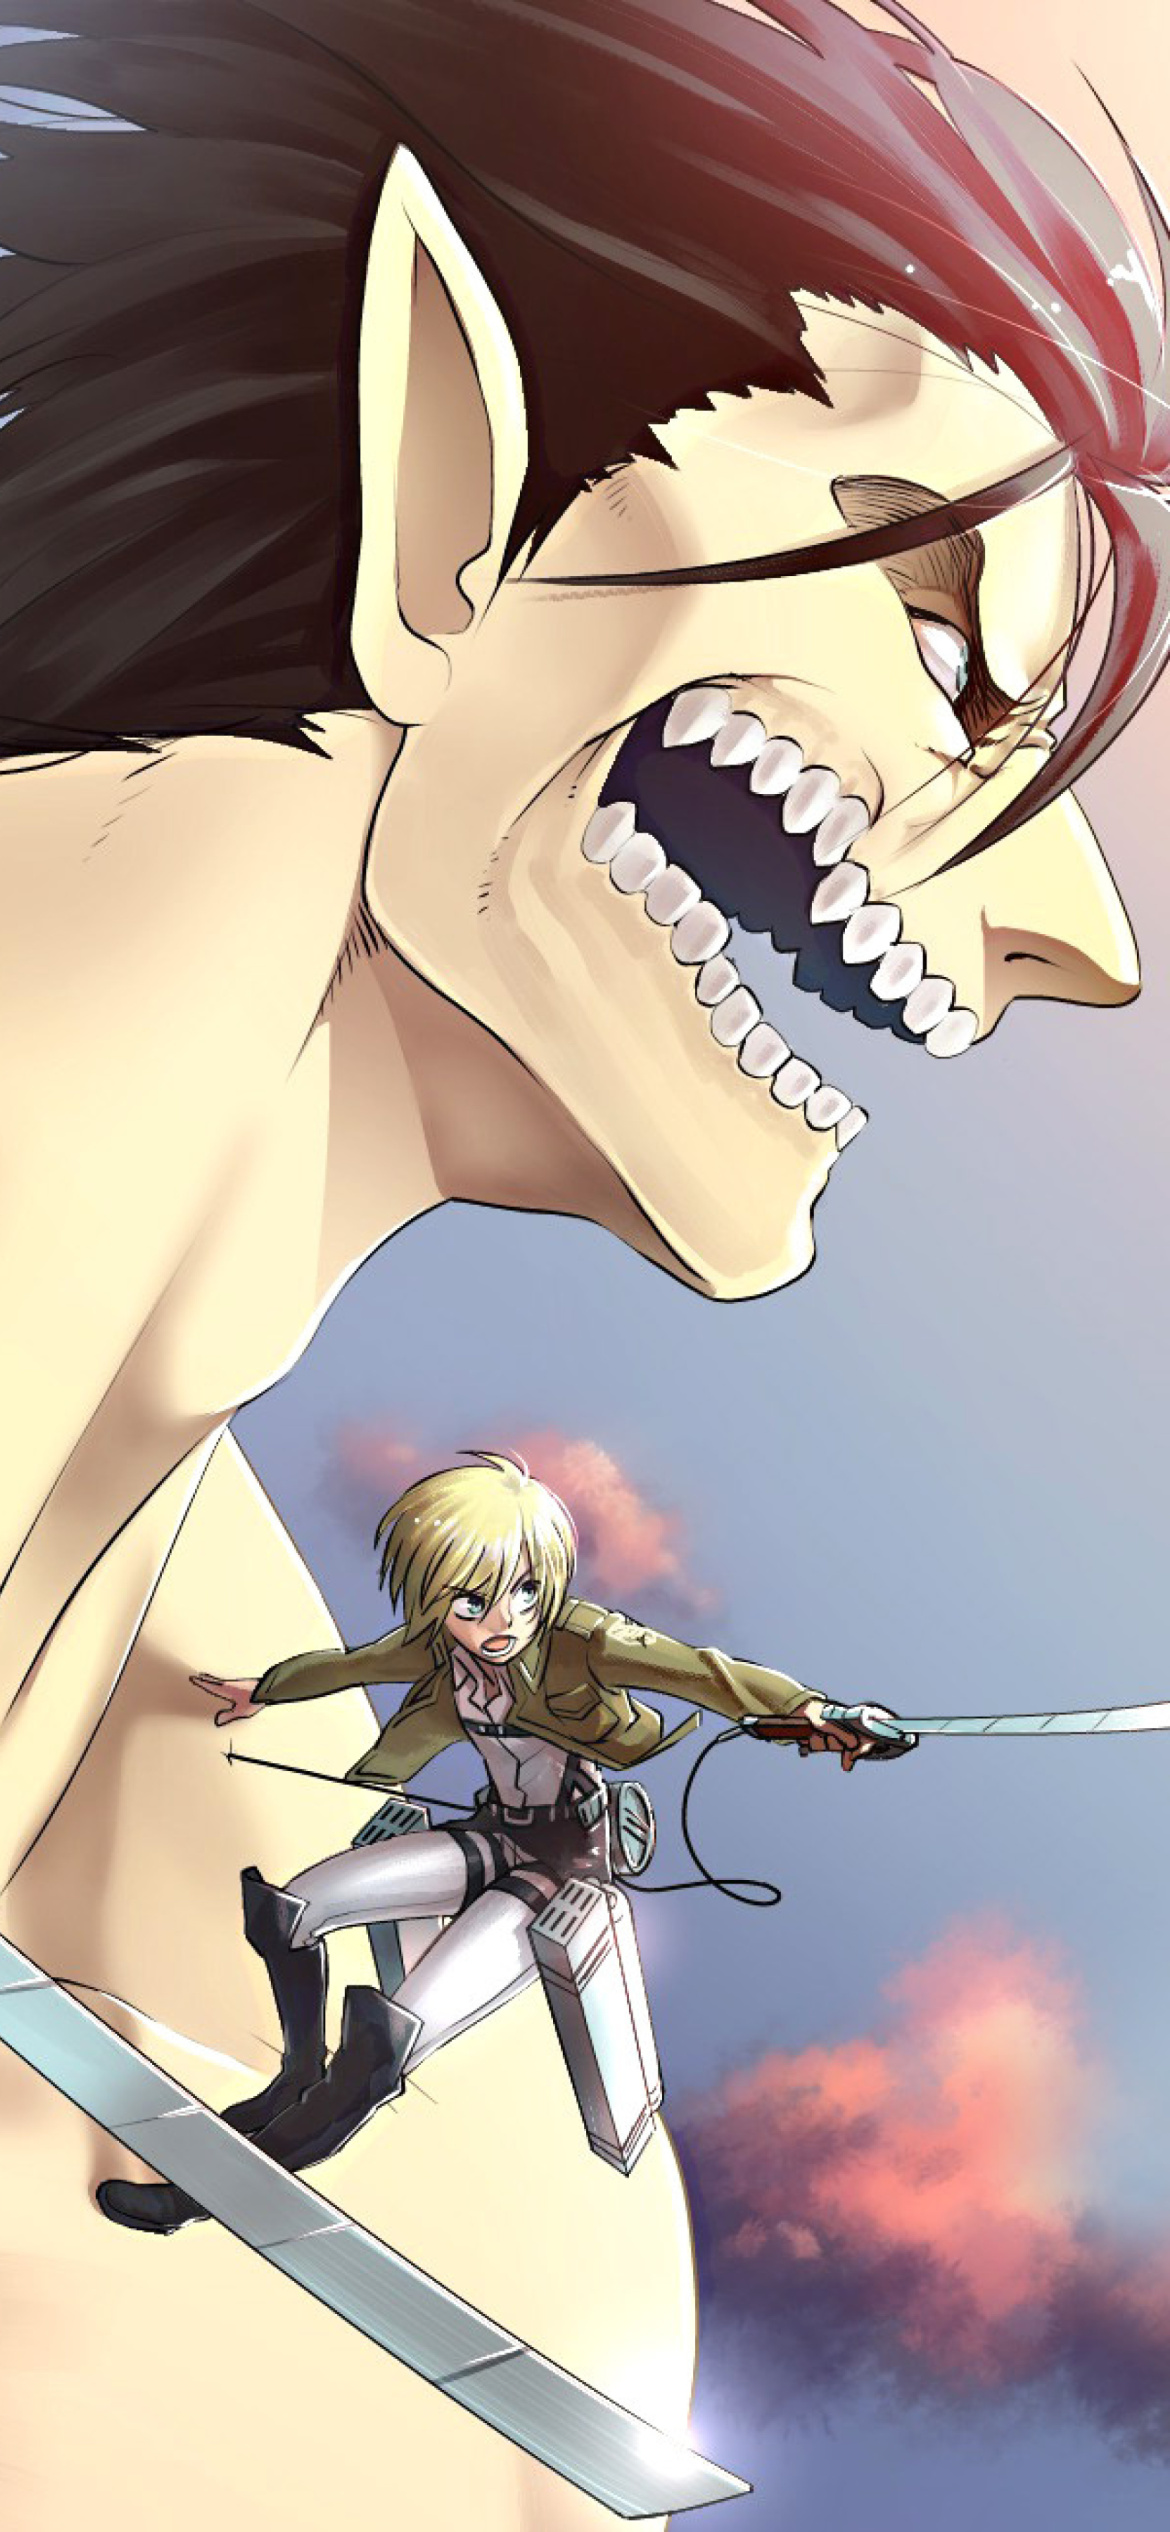 Shingeki no Kyojin, Attack on Titan with Mikasa Ackerman wallpaper 1170x2532